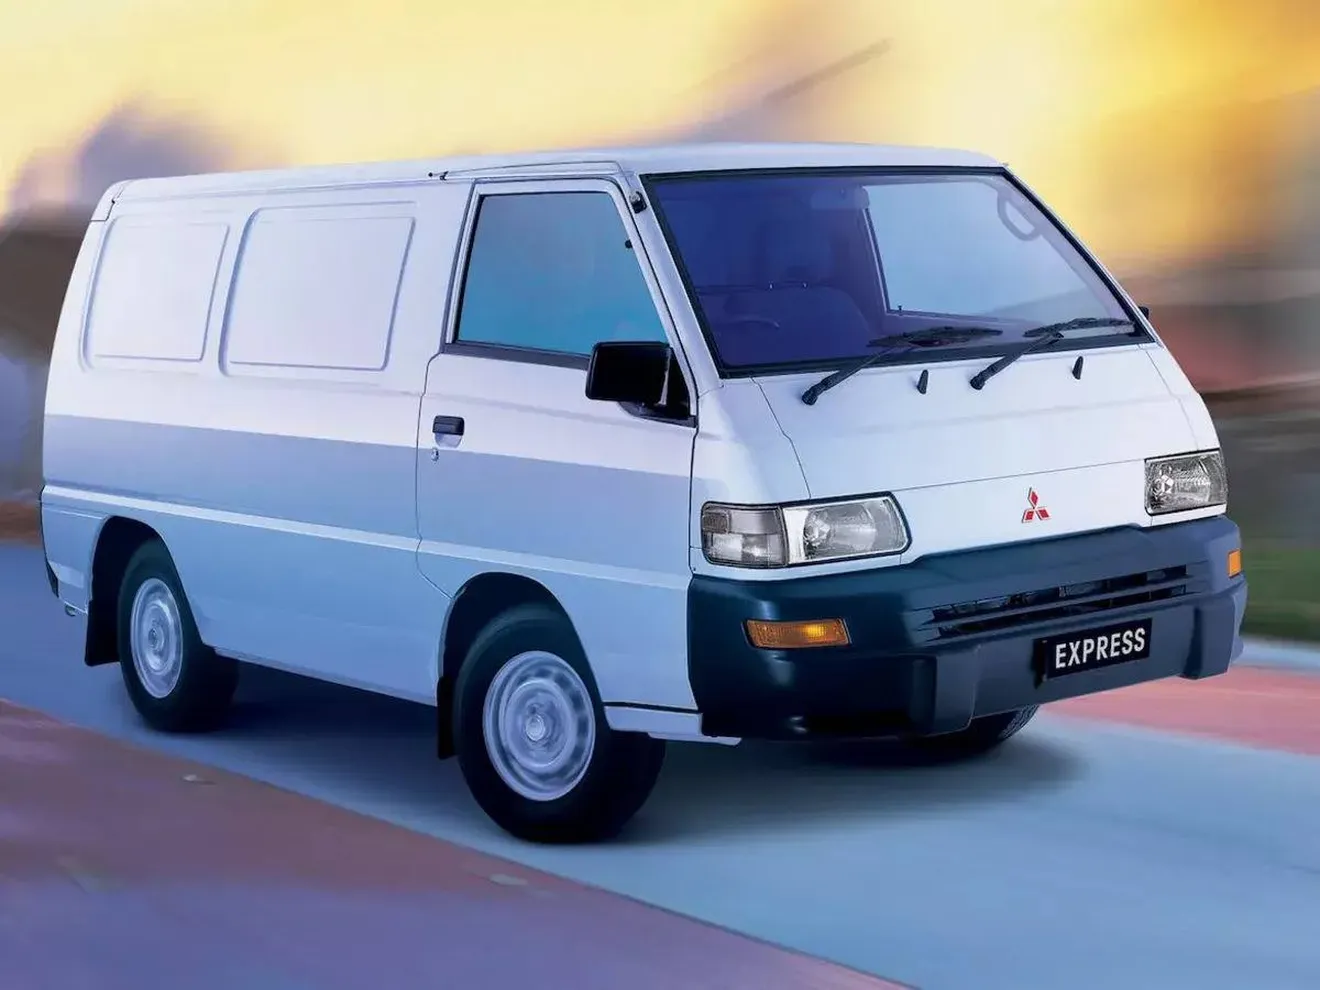 Mitsubishi tendrá una furgoneta similar a Renault Trafic